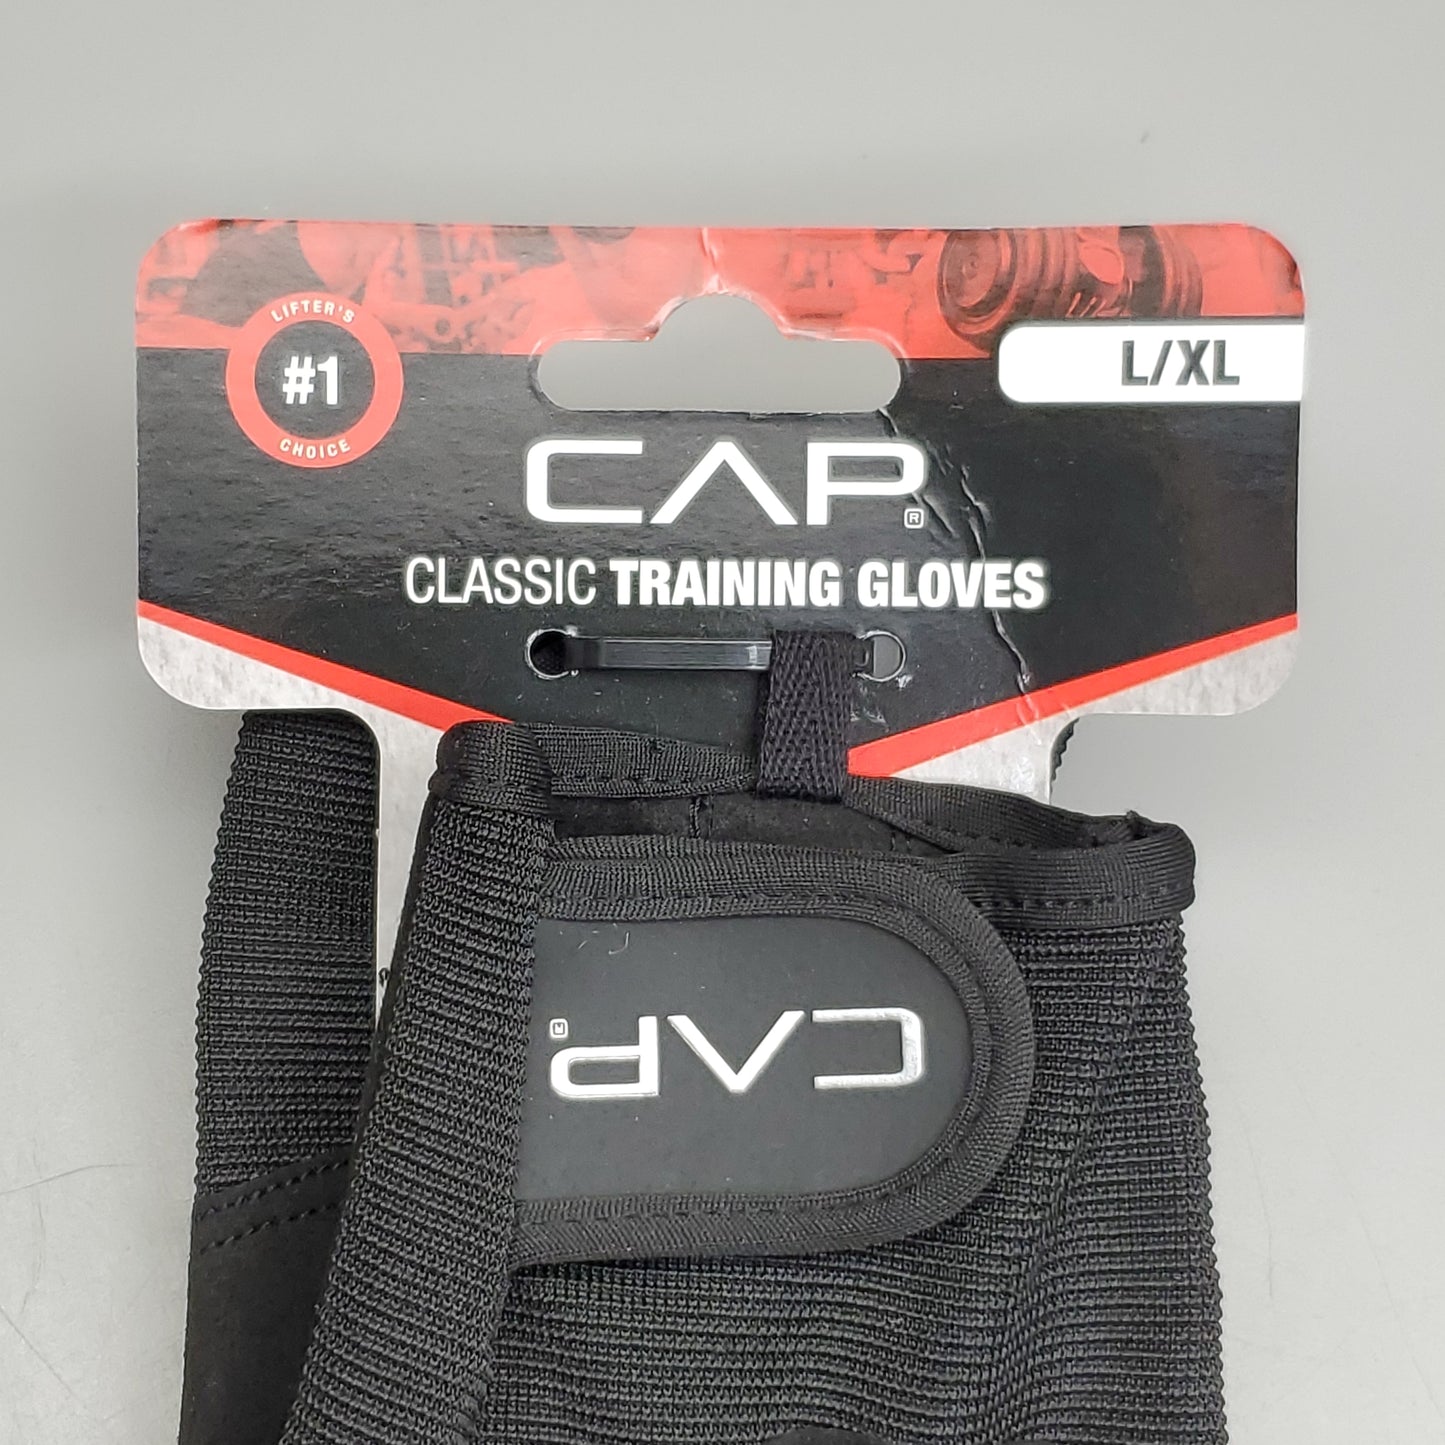 CAP Pair of Classic Training Gloves SZ L / XL Hook & Loop W/ Finger Pull Tab Black HHWG-1BKL (New)